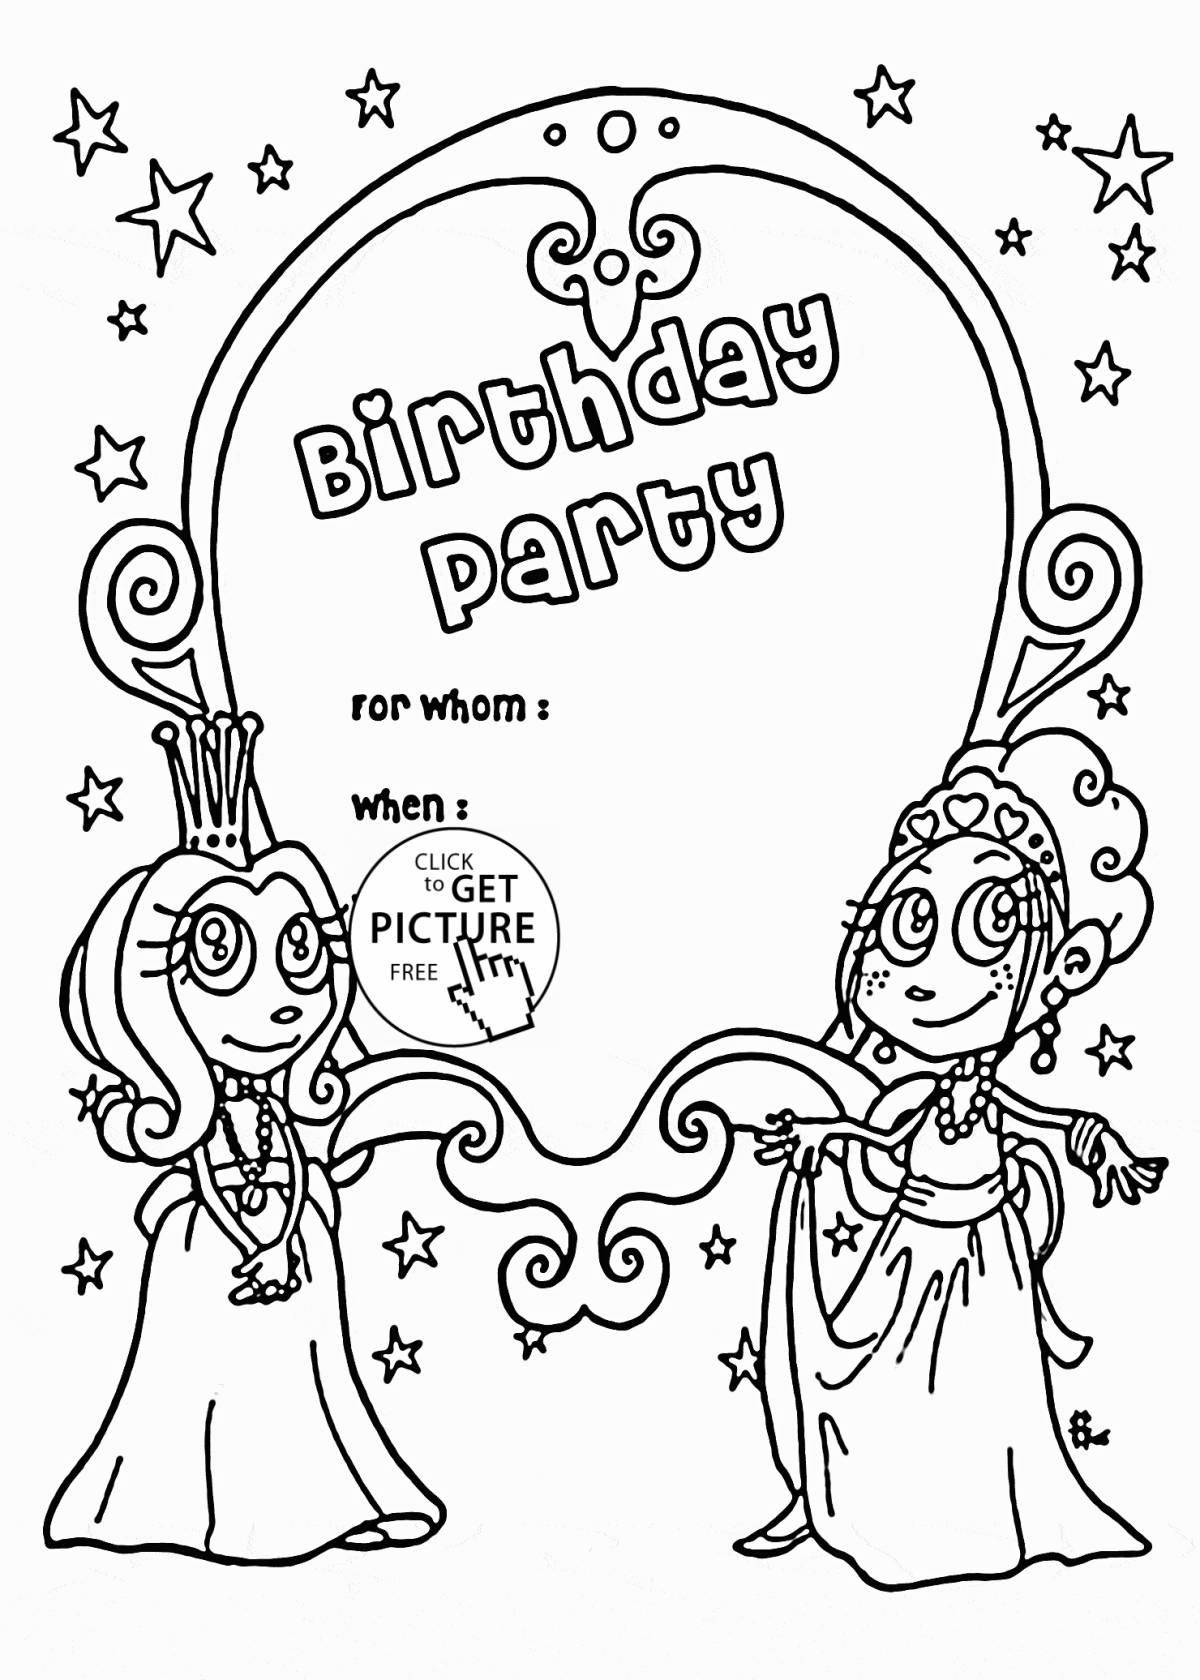 Happy birthday invitation coloring page